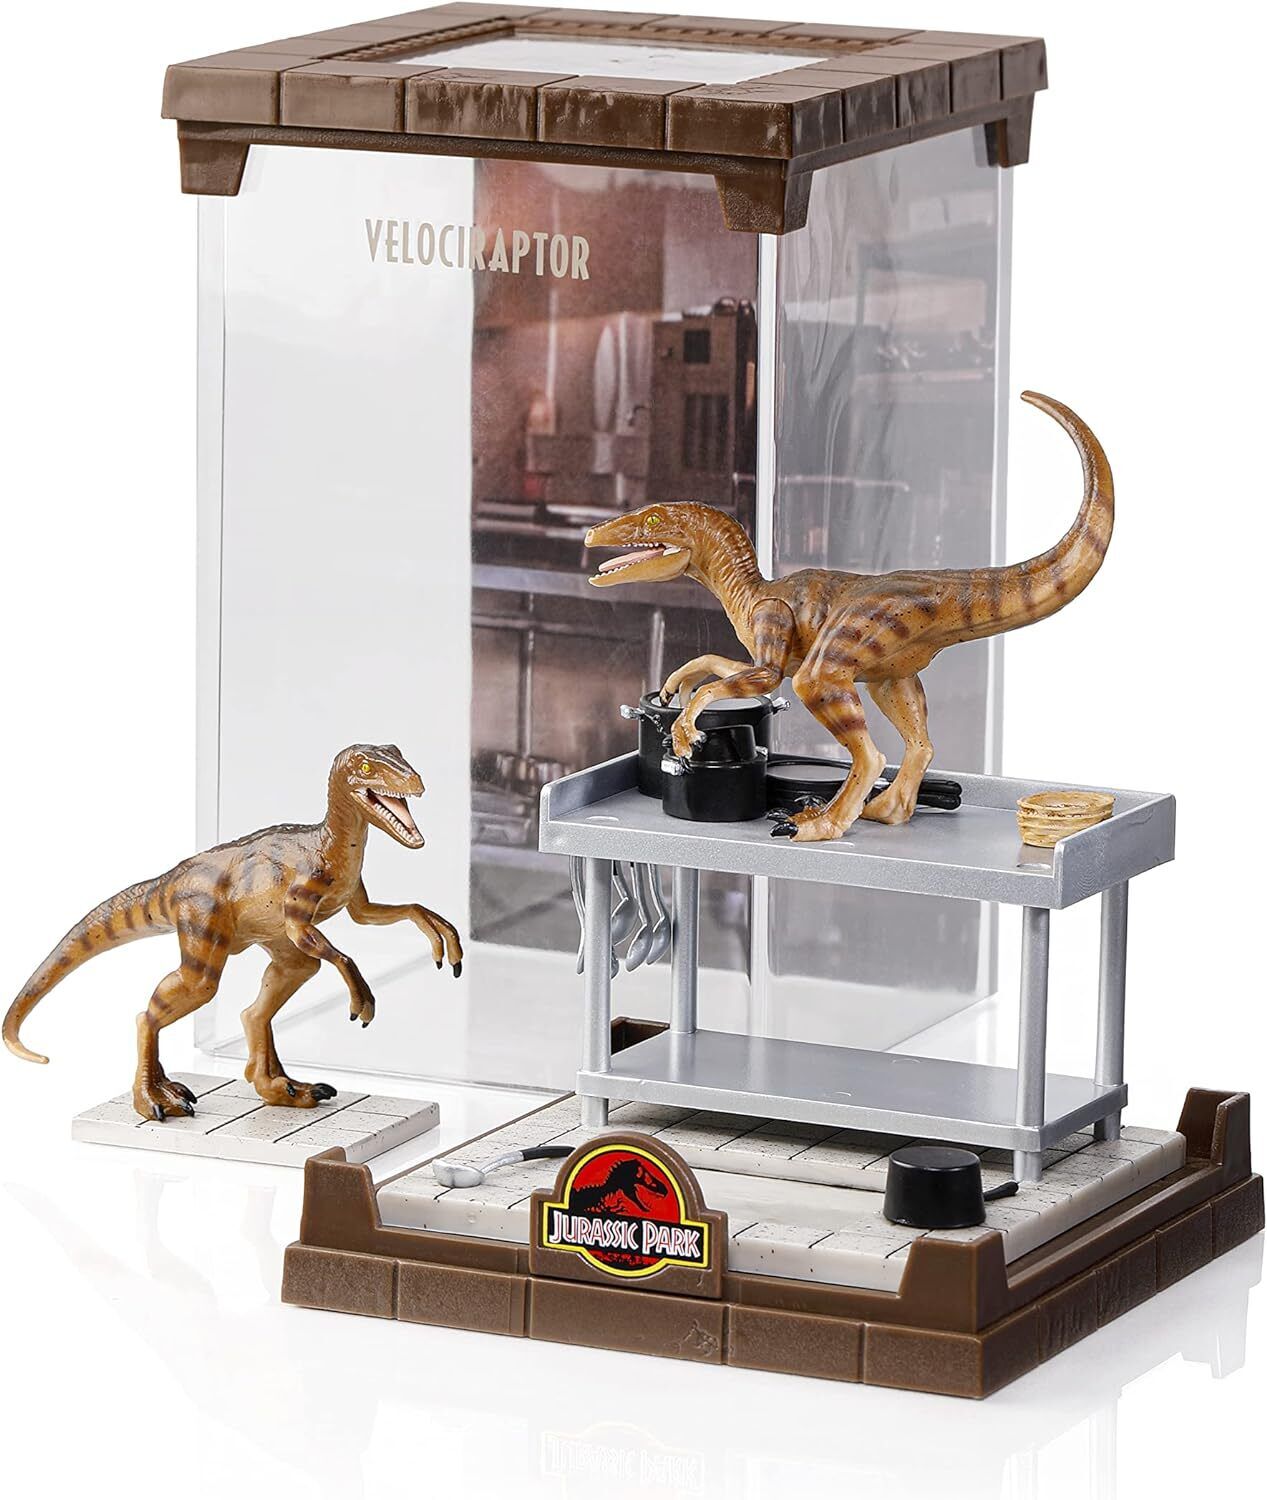 Jurassic Park VELOCIRAPTOR 7" The Noble Collection